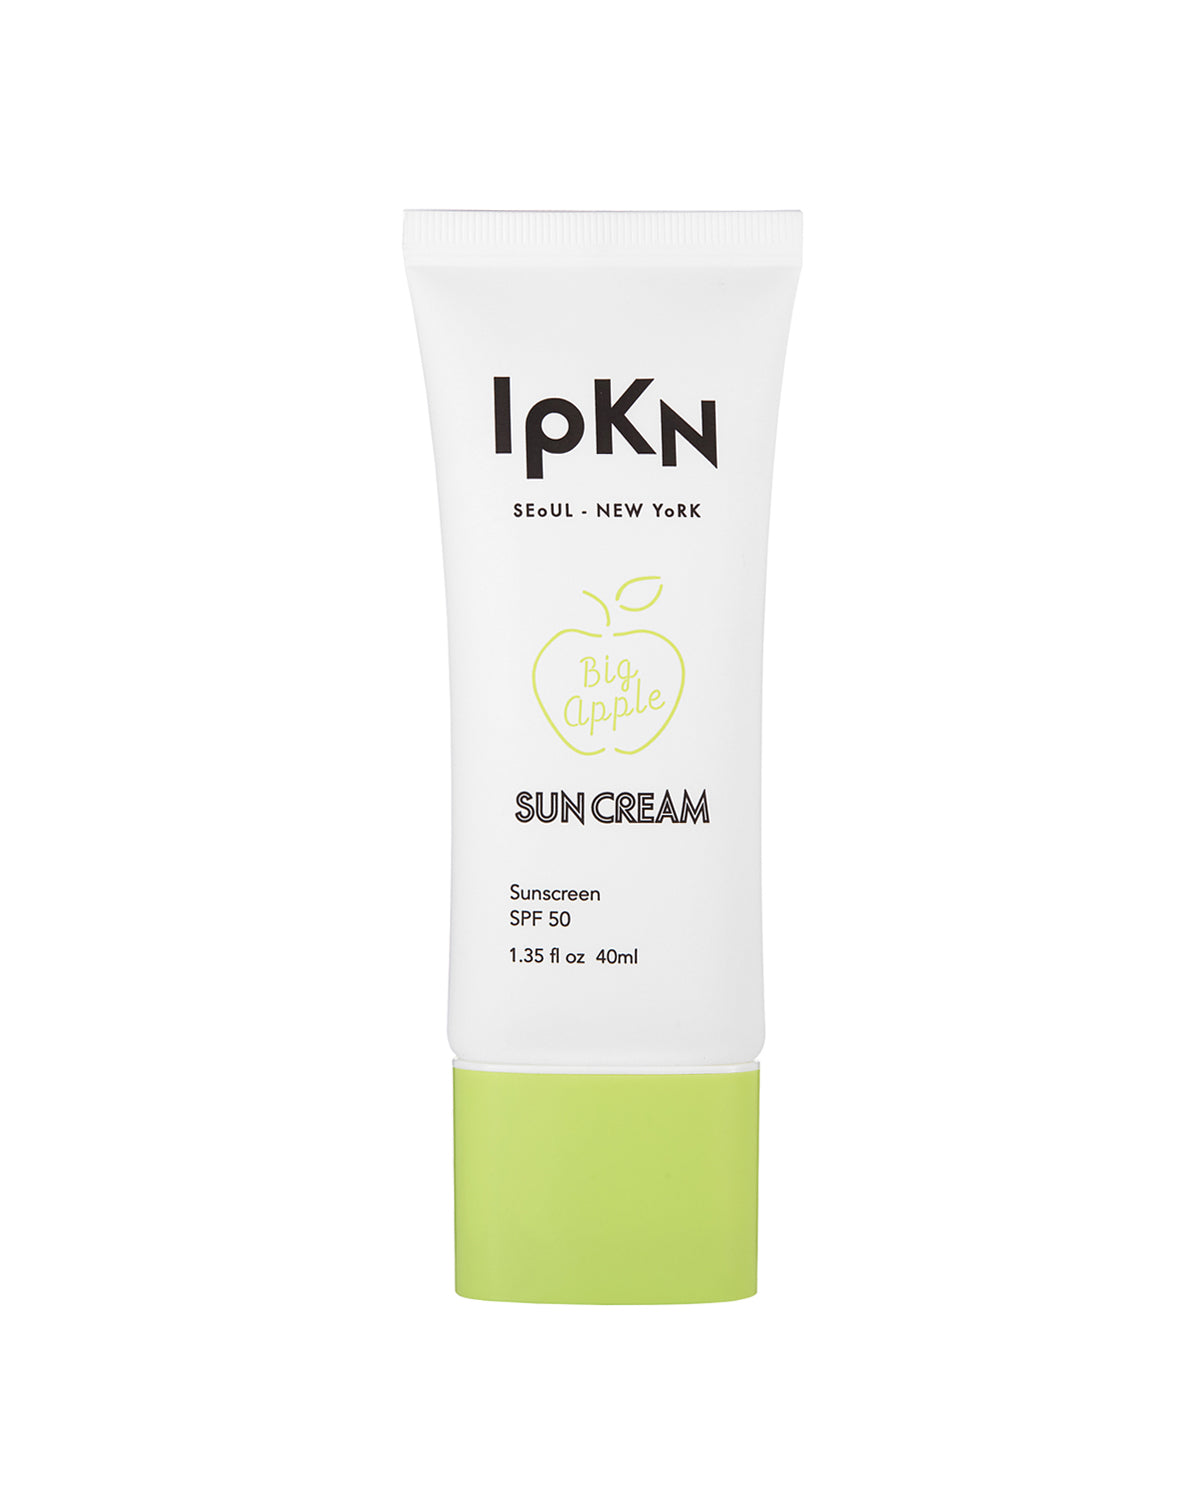 IPKN Big Apple Sun Cream, SPF 50 